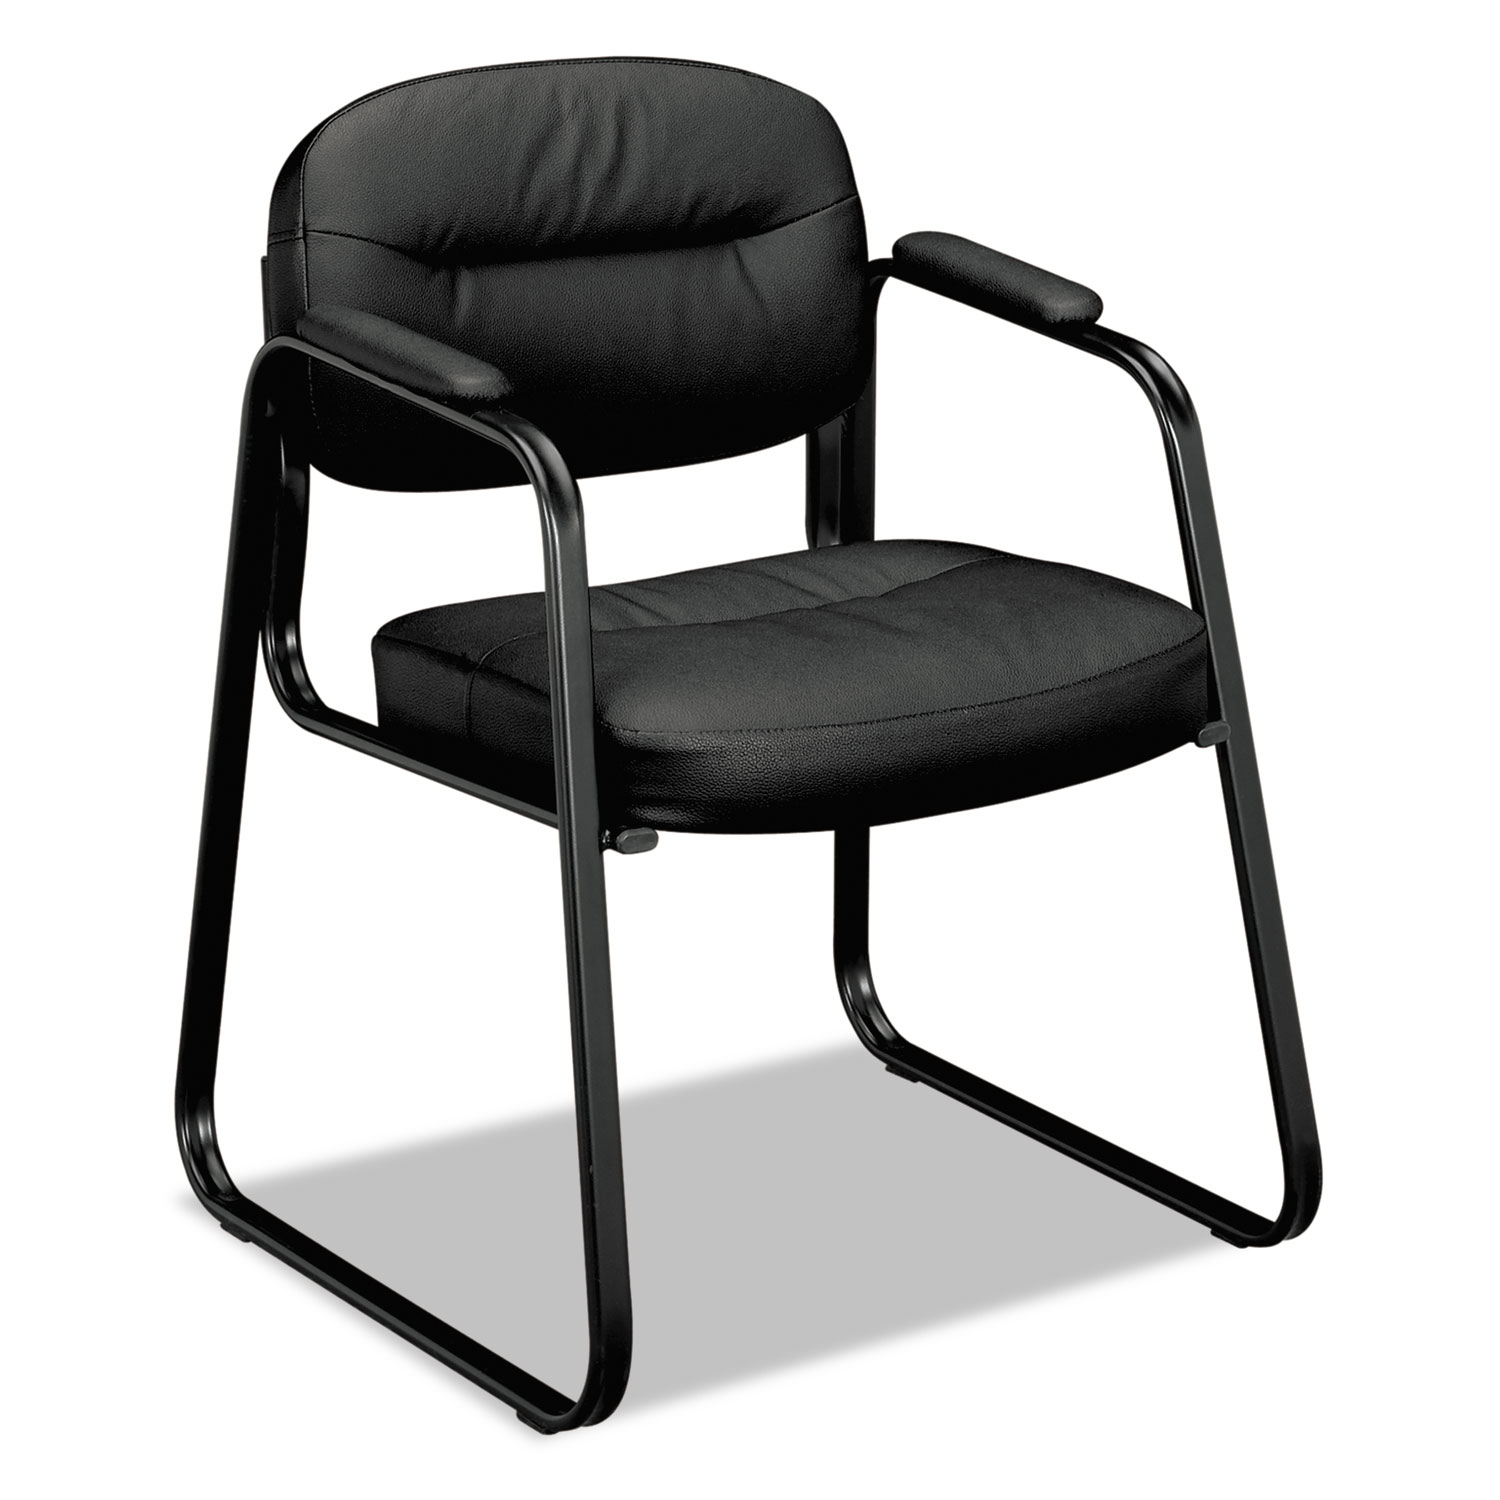  HON HVL653.SB11 HVL653 Leather Guest Chair, 22.25 x 23 x 32, Black Seat/Black Back, Black Base (BSXVL653SB11) 